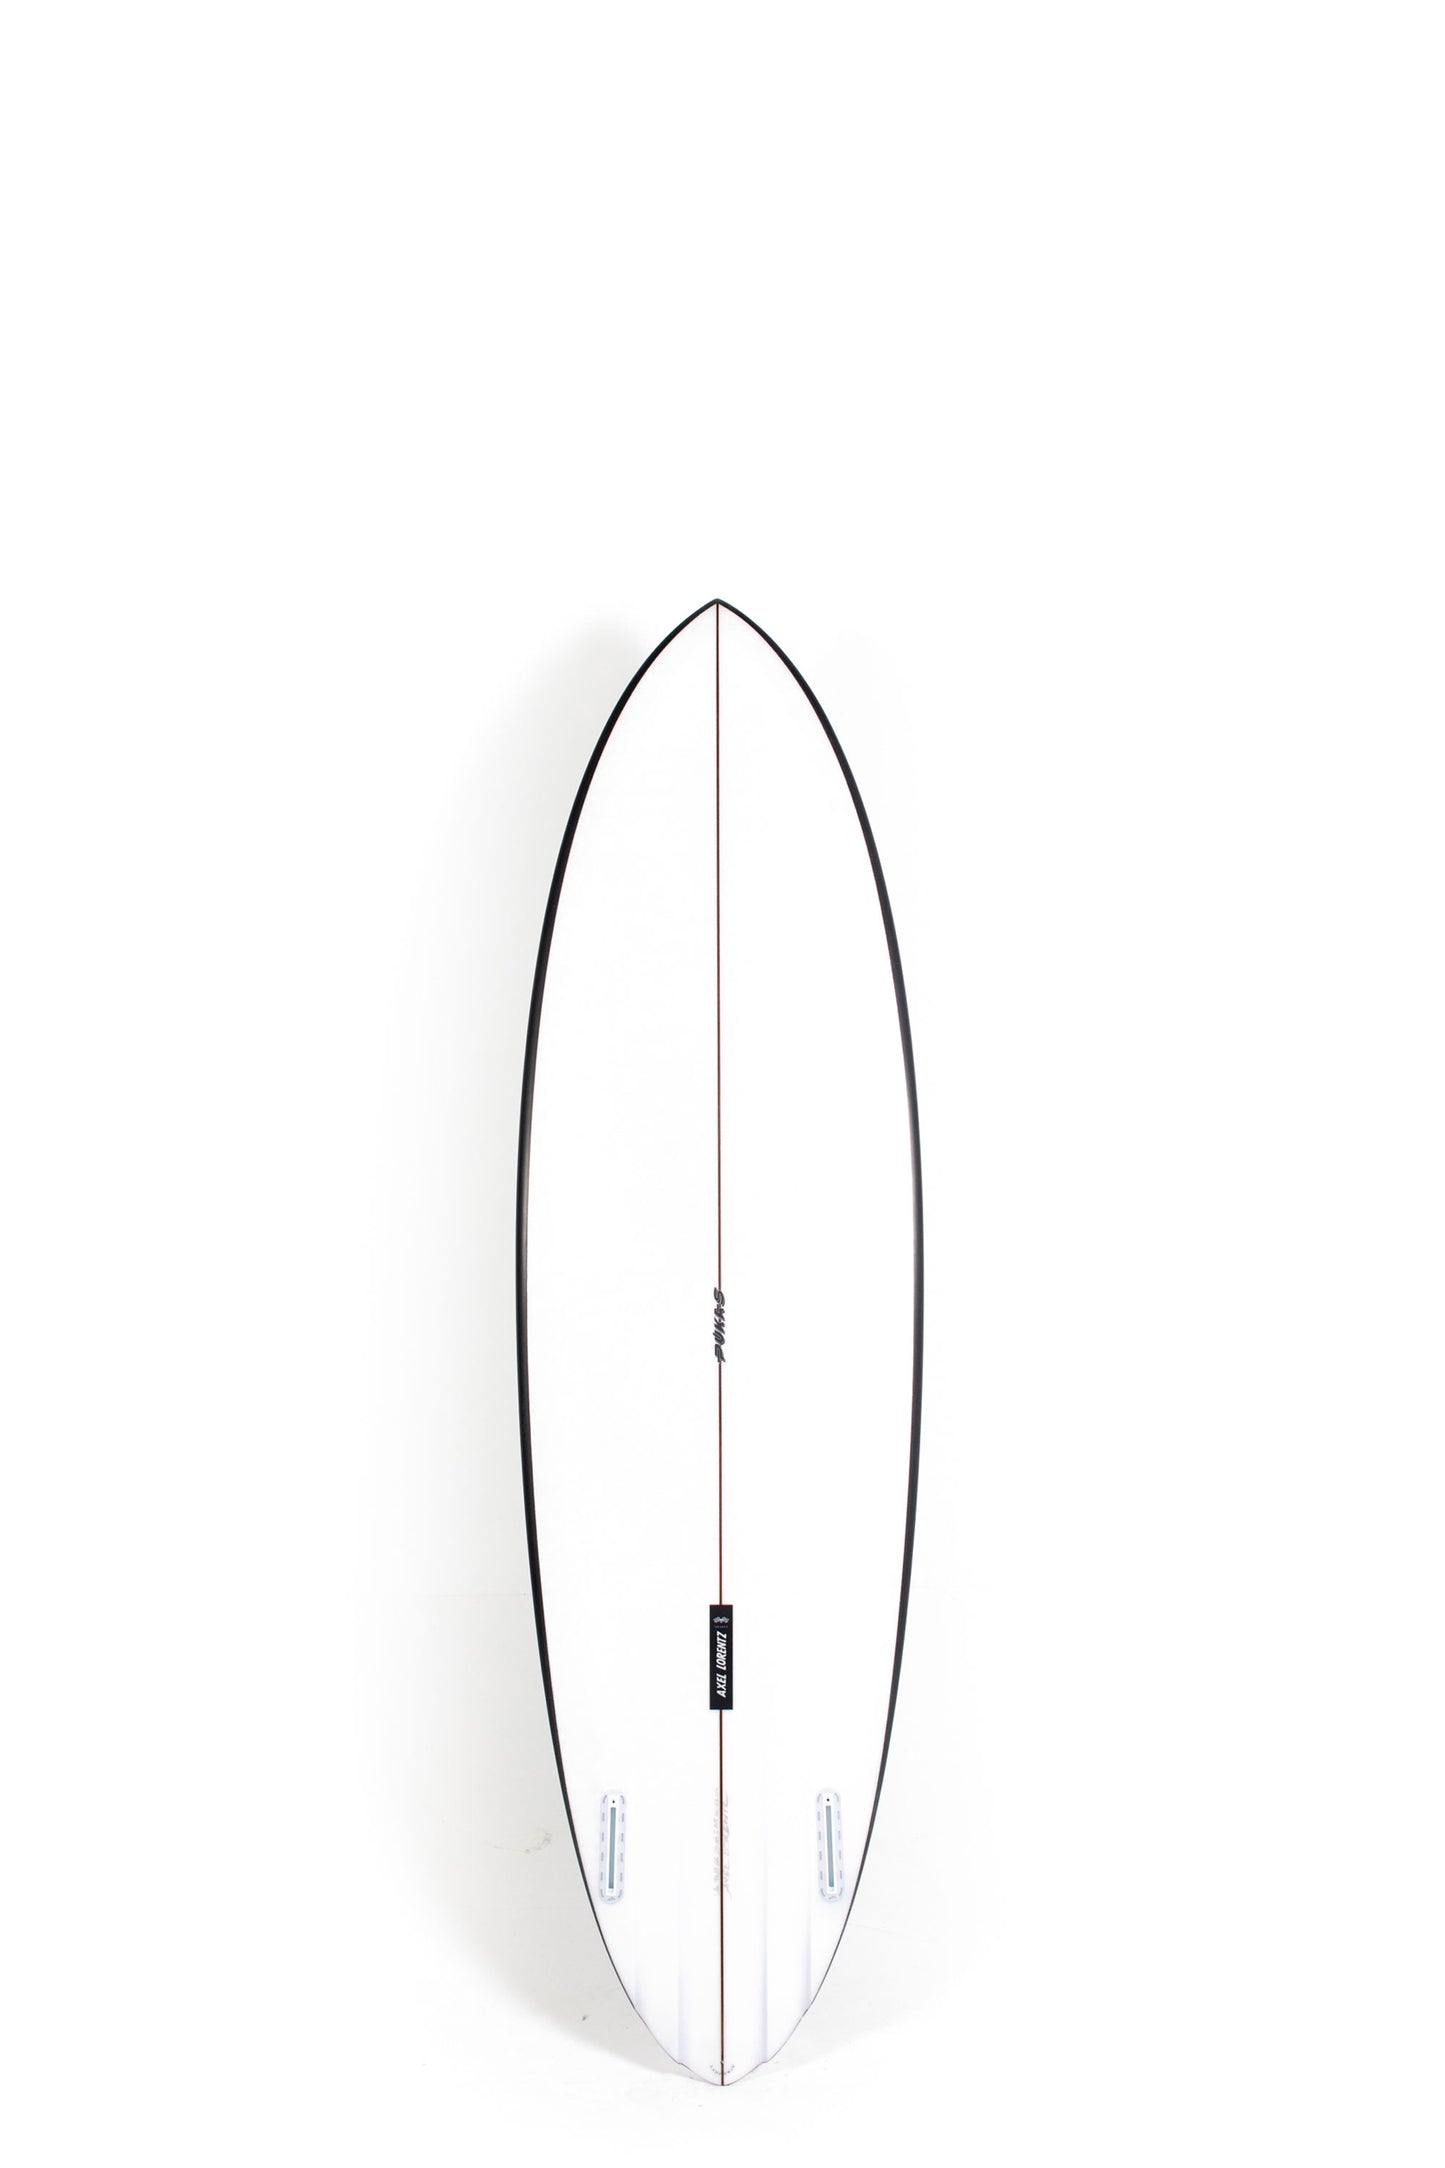 Pukas Surf Shop - Pukas Surfboard - LADY TWIN by Axel Lorentz - 6’6” x 20,8 x 2,85 - 40,6L - AX09431